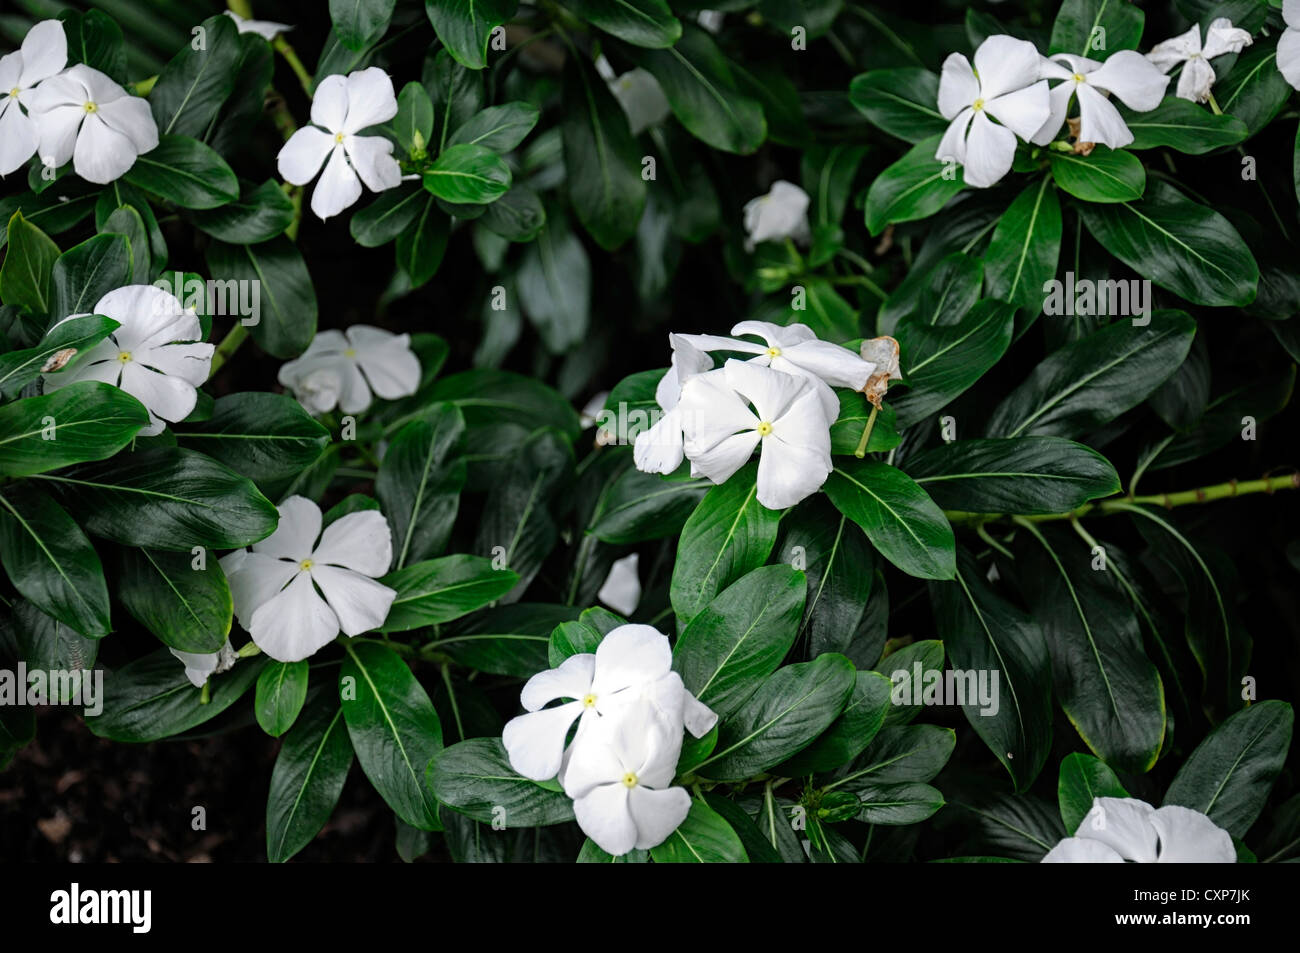 catharanthus roseus albus alba syn vinca rosea madagascar periwinkle white flowers flowering blooms petals plant portraits Stock Photo